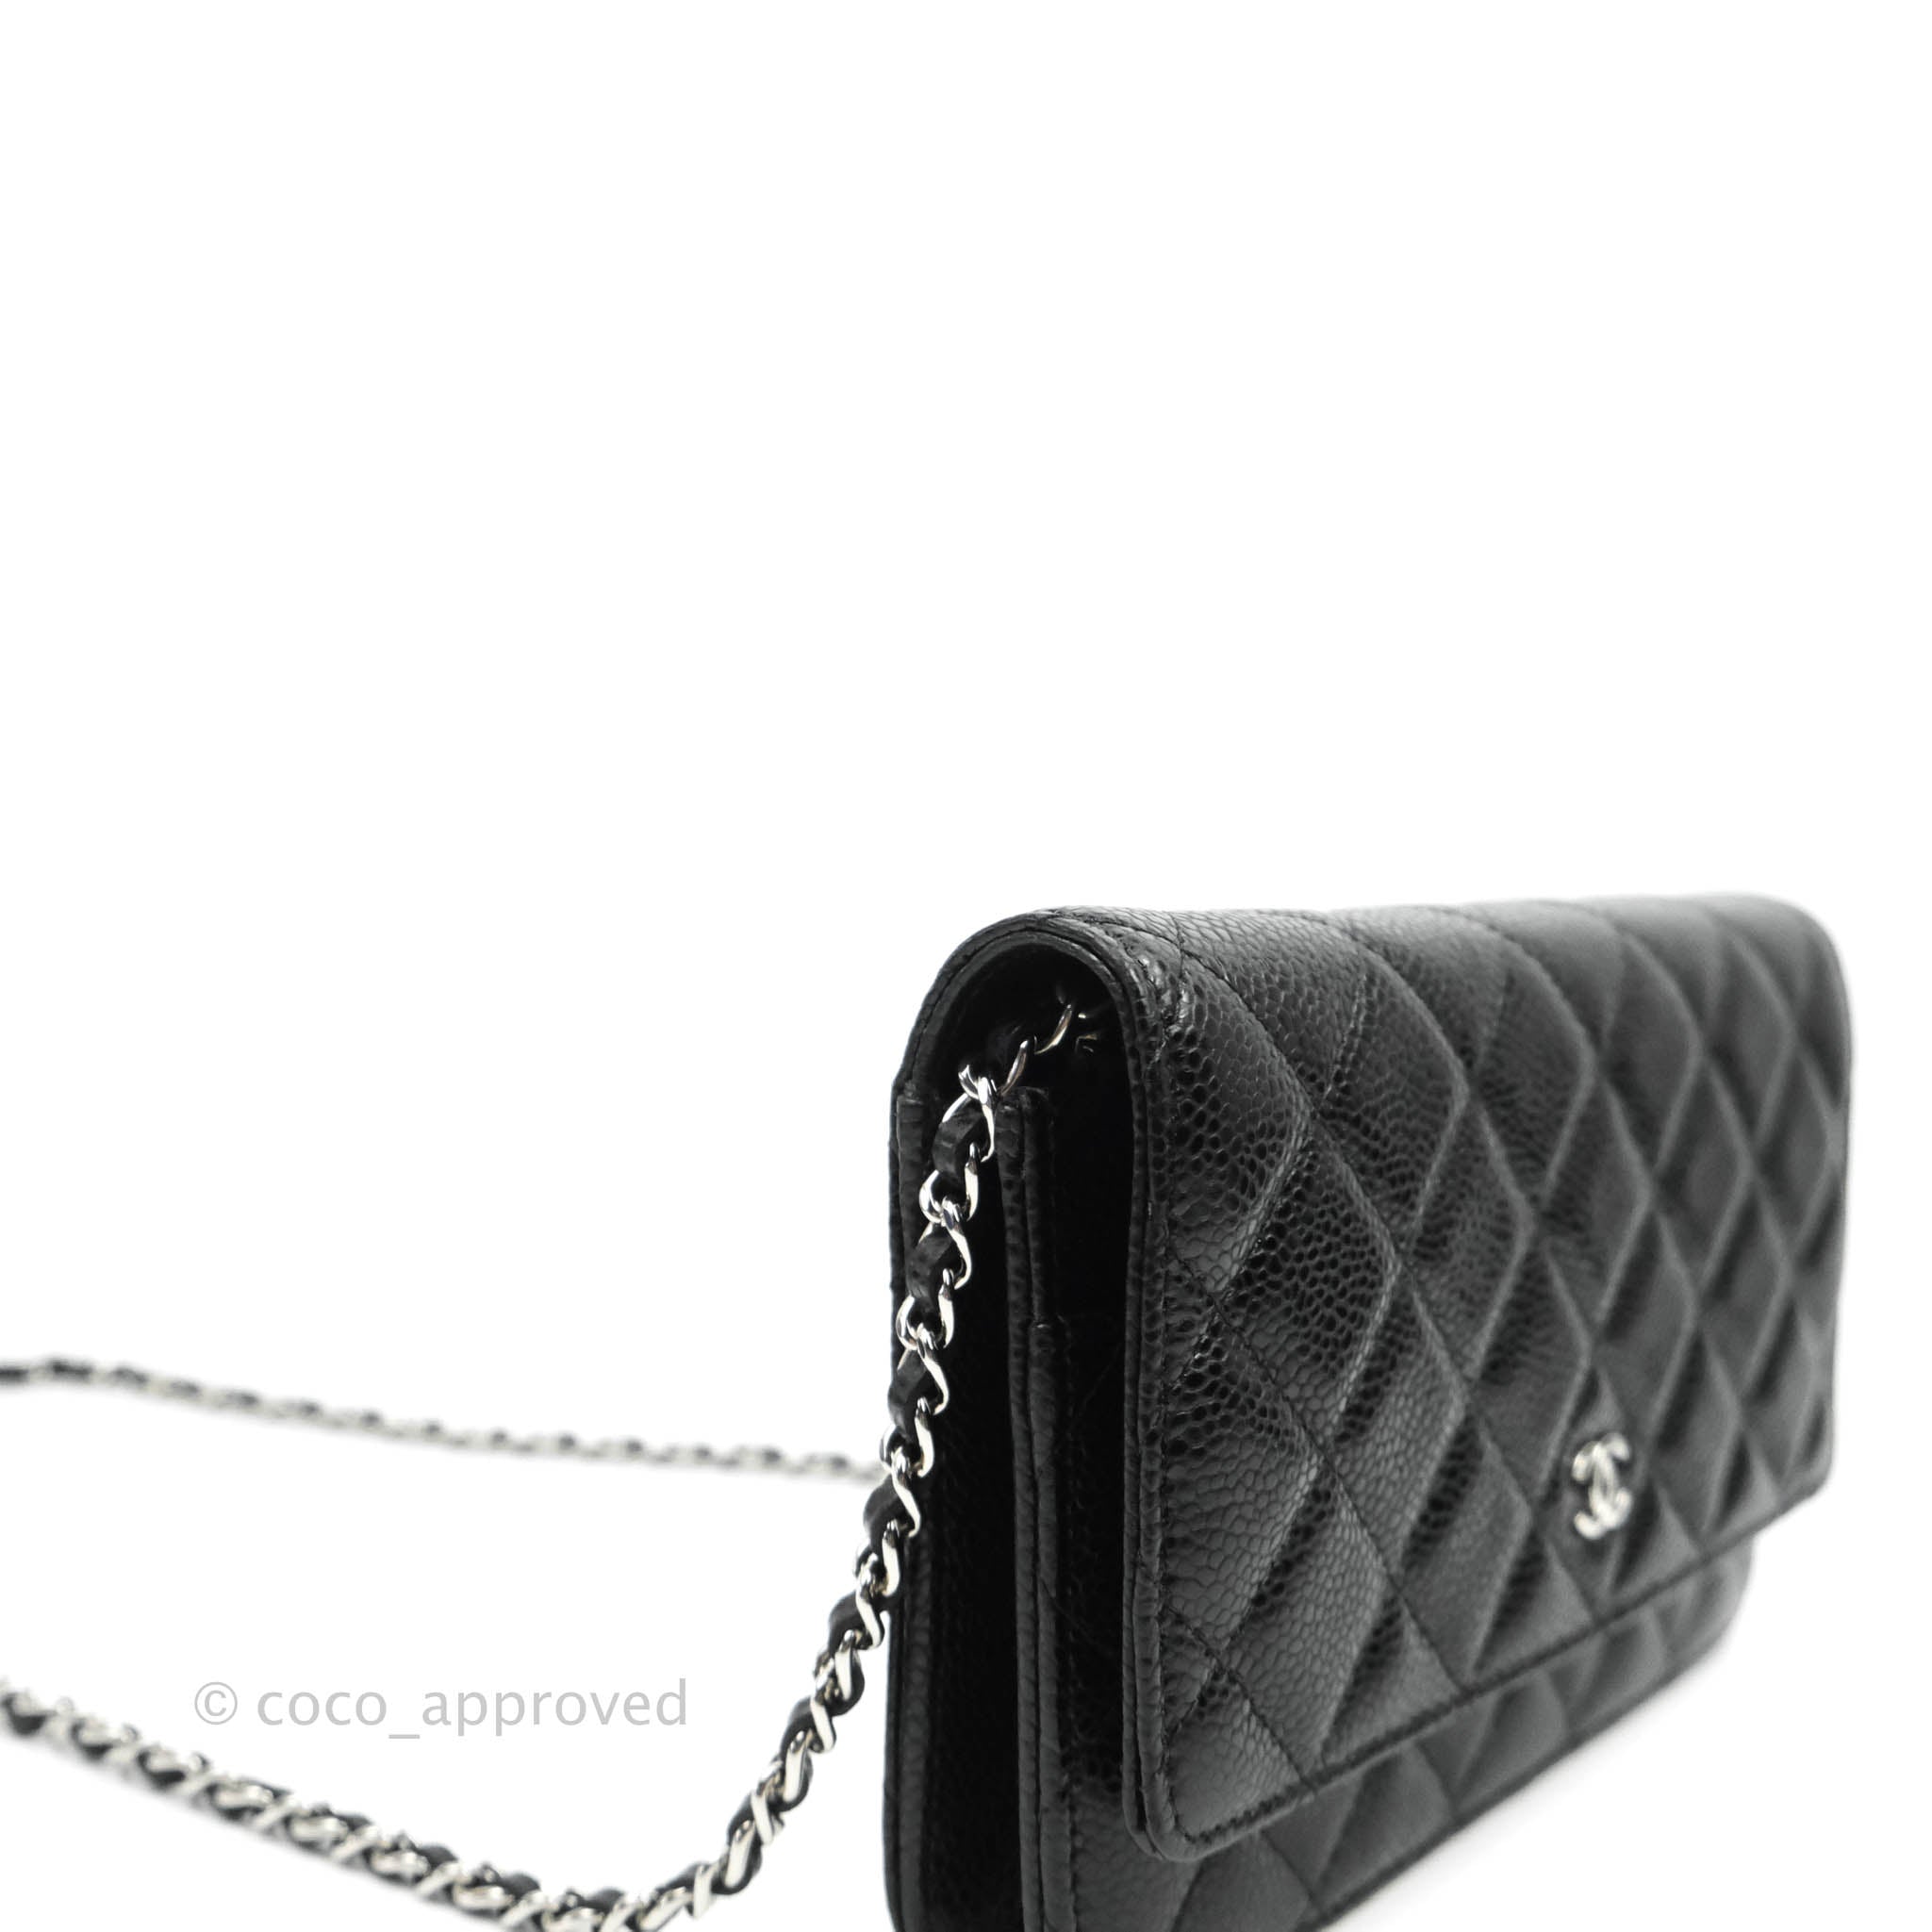 Chanel WOC Wallet on Chain in Black Lambskin with Silver Hardware  SOLD  Chanel  woc Chanel Lambskin